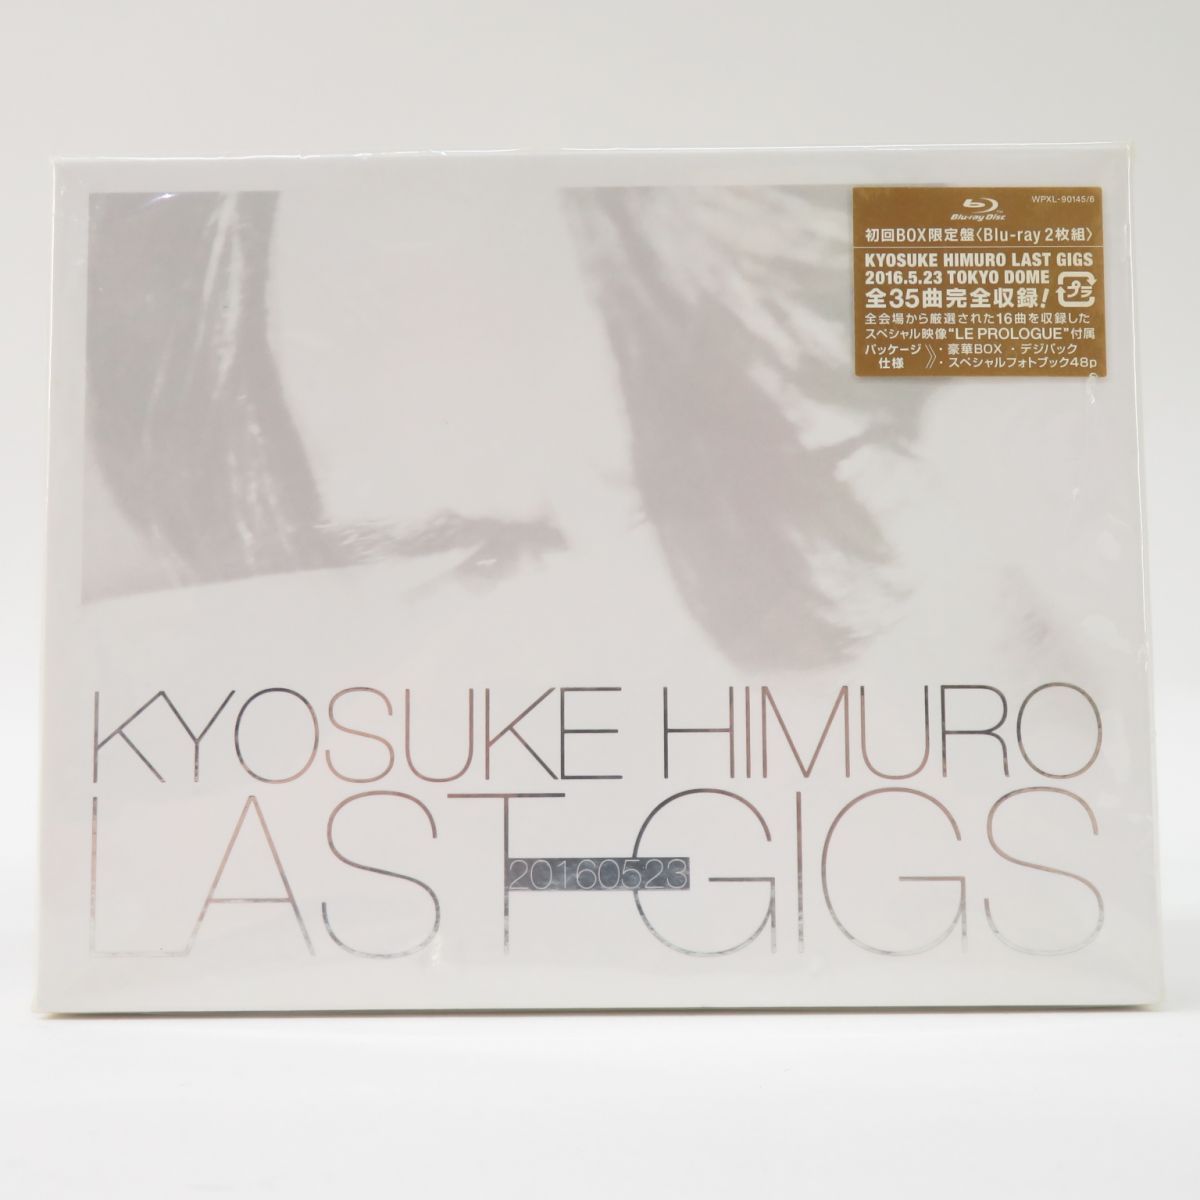 2Blu-ray 氷室京介 KYOSUKE HIMURO LAST GIGS 初回BOX限定盤 ※中古